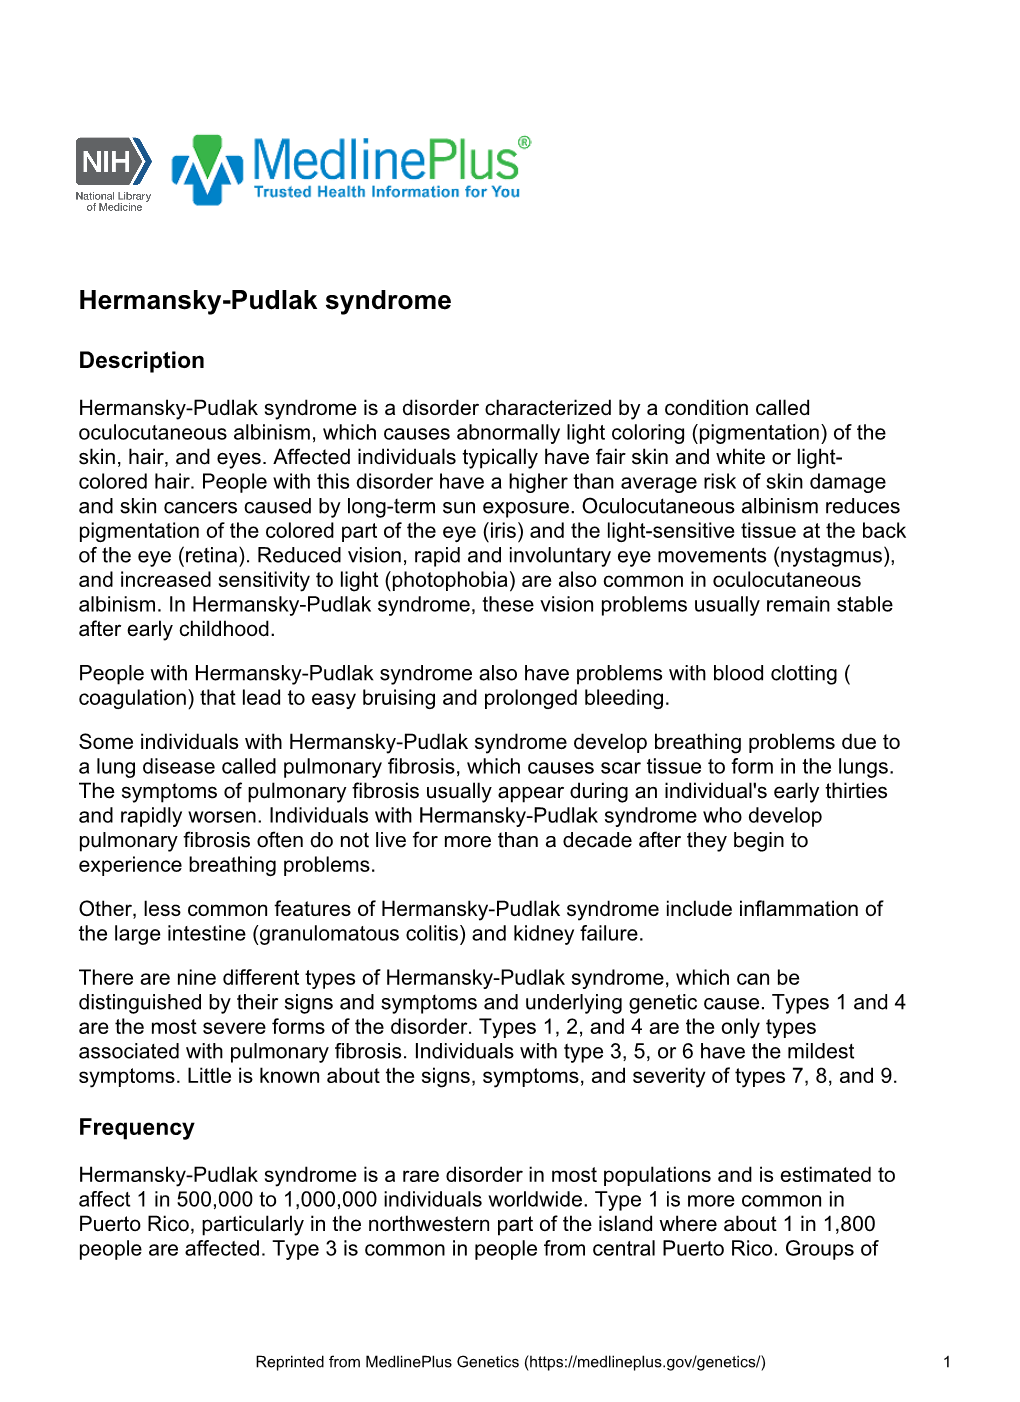 Hermansky-Pudlak Syndrome